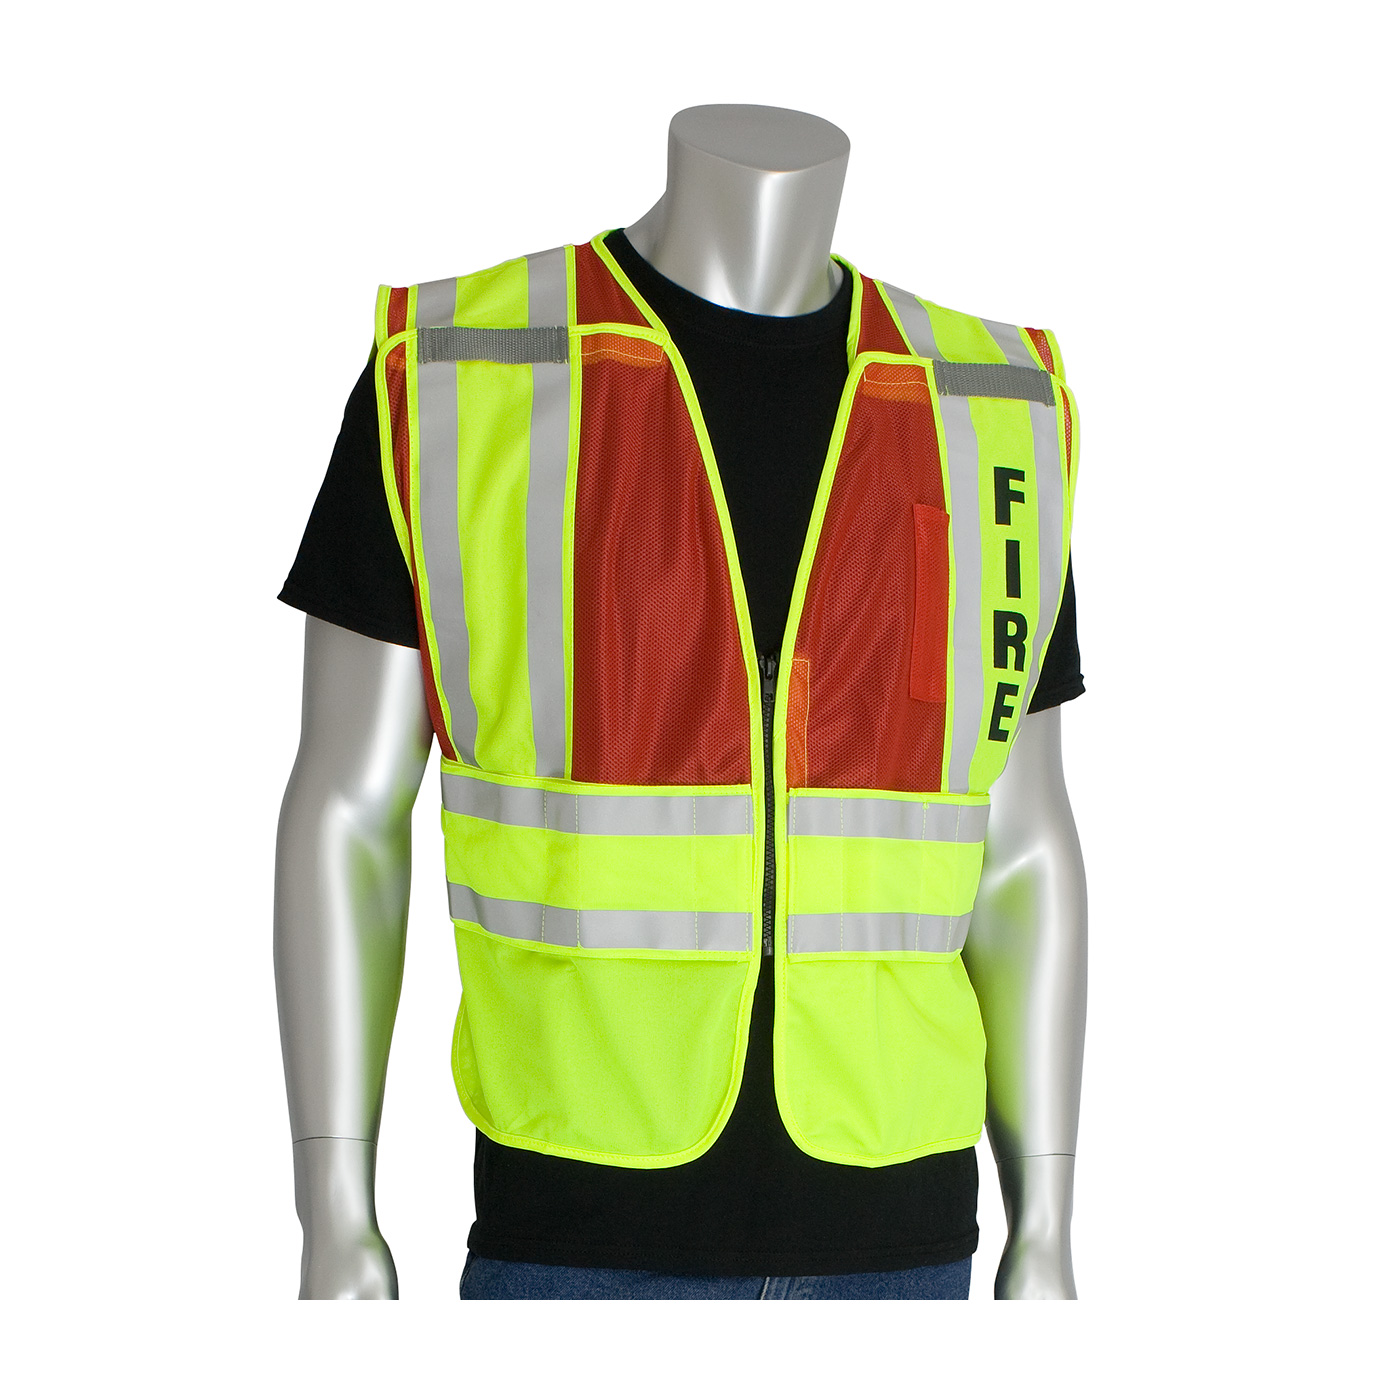 皮普®ANSIType P Class 2 Public Safety Vest with FIRE Logo #302-PSV-RED